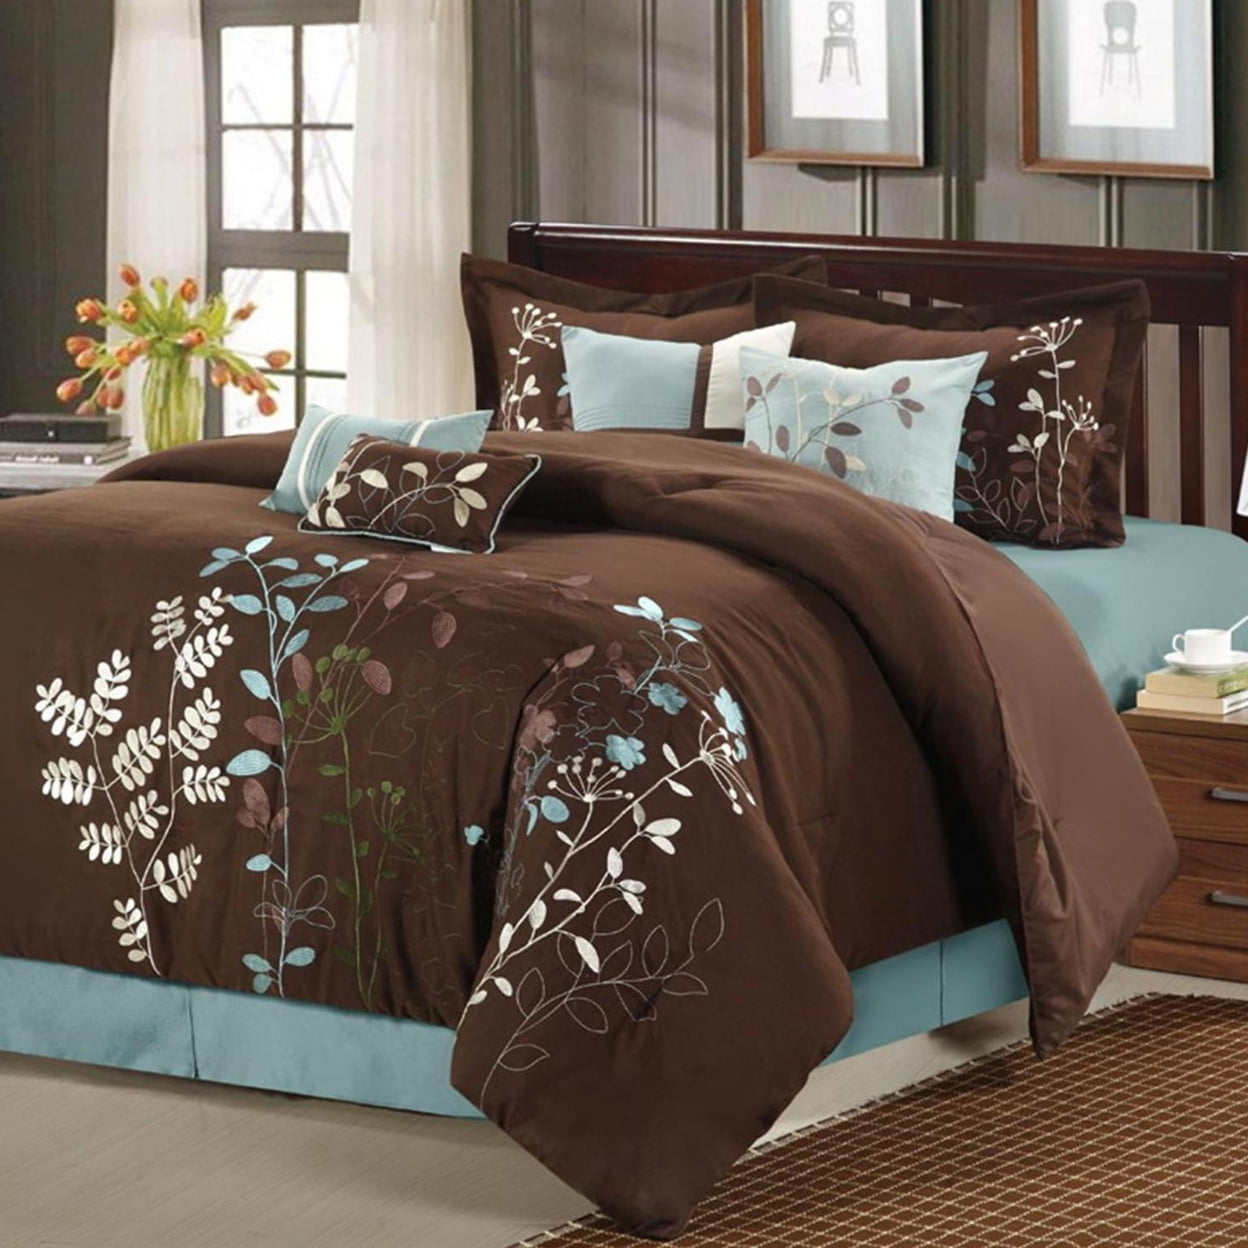 21cq102-us Bliss Garden Embroidered Comforter Set - Brown - Queen - 8 Piece